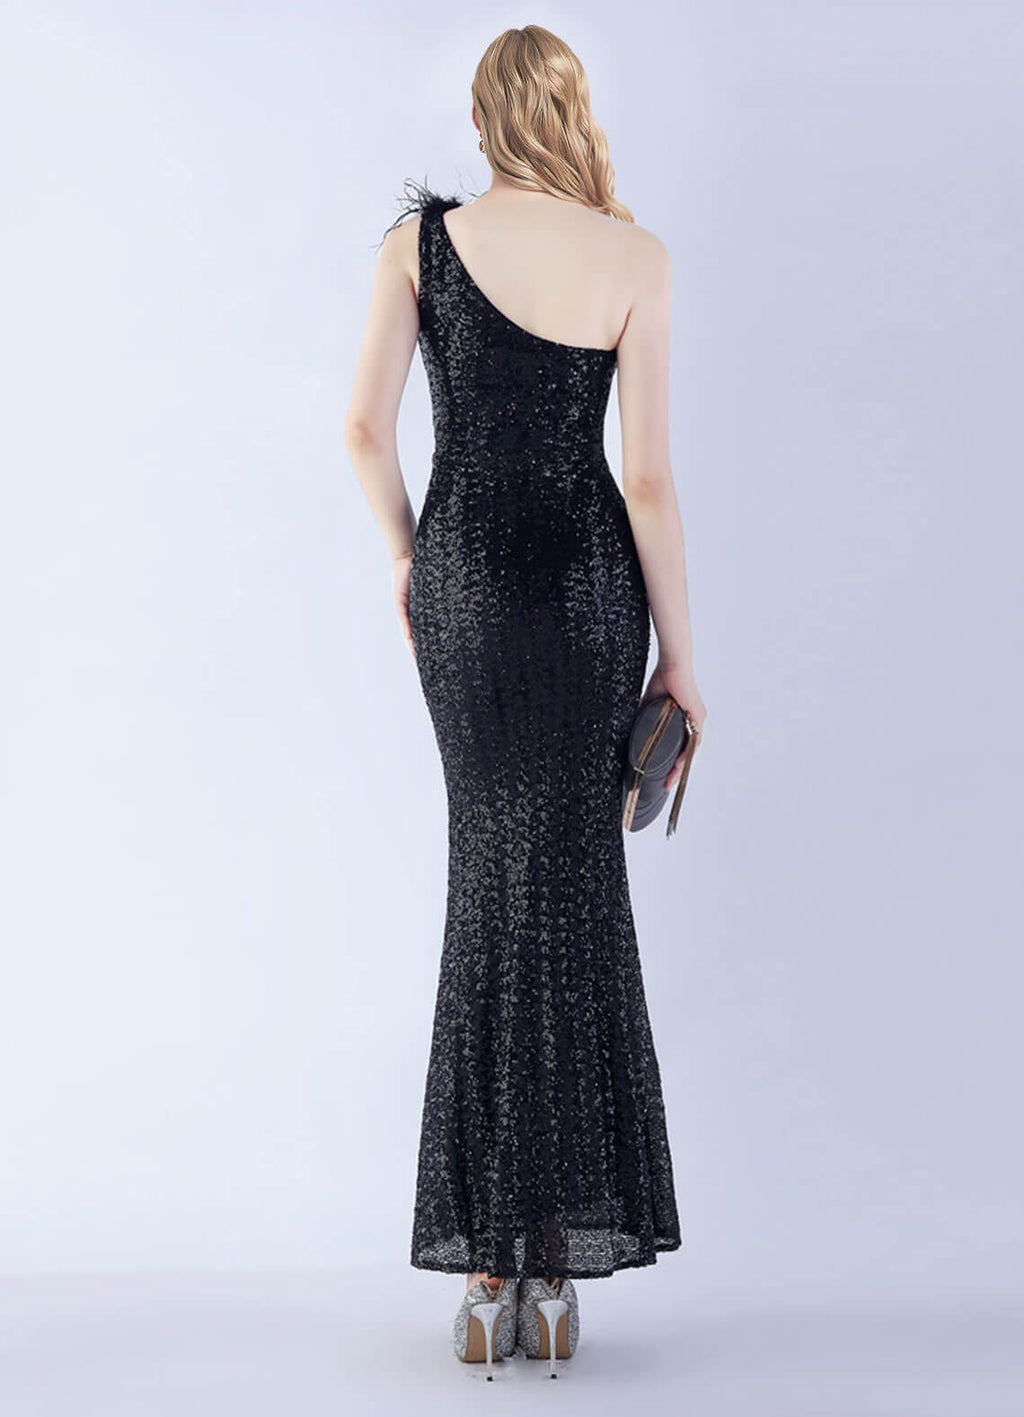 NZ Bridal Black One Shoulder Sequin Mermaid Prom Dress 31359 Ruby a